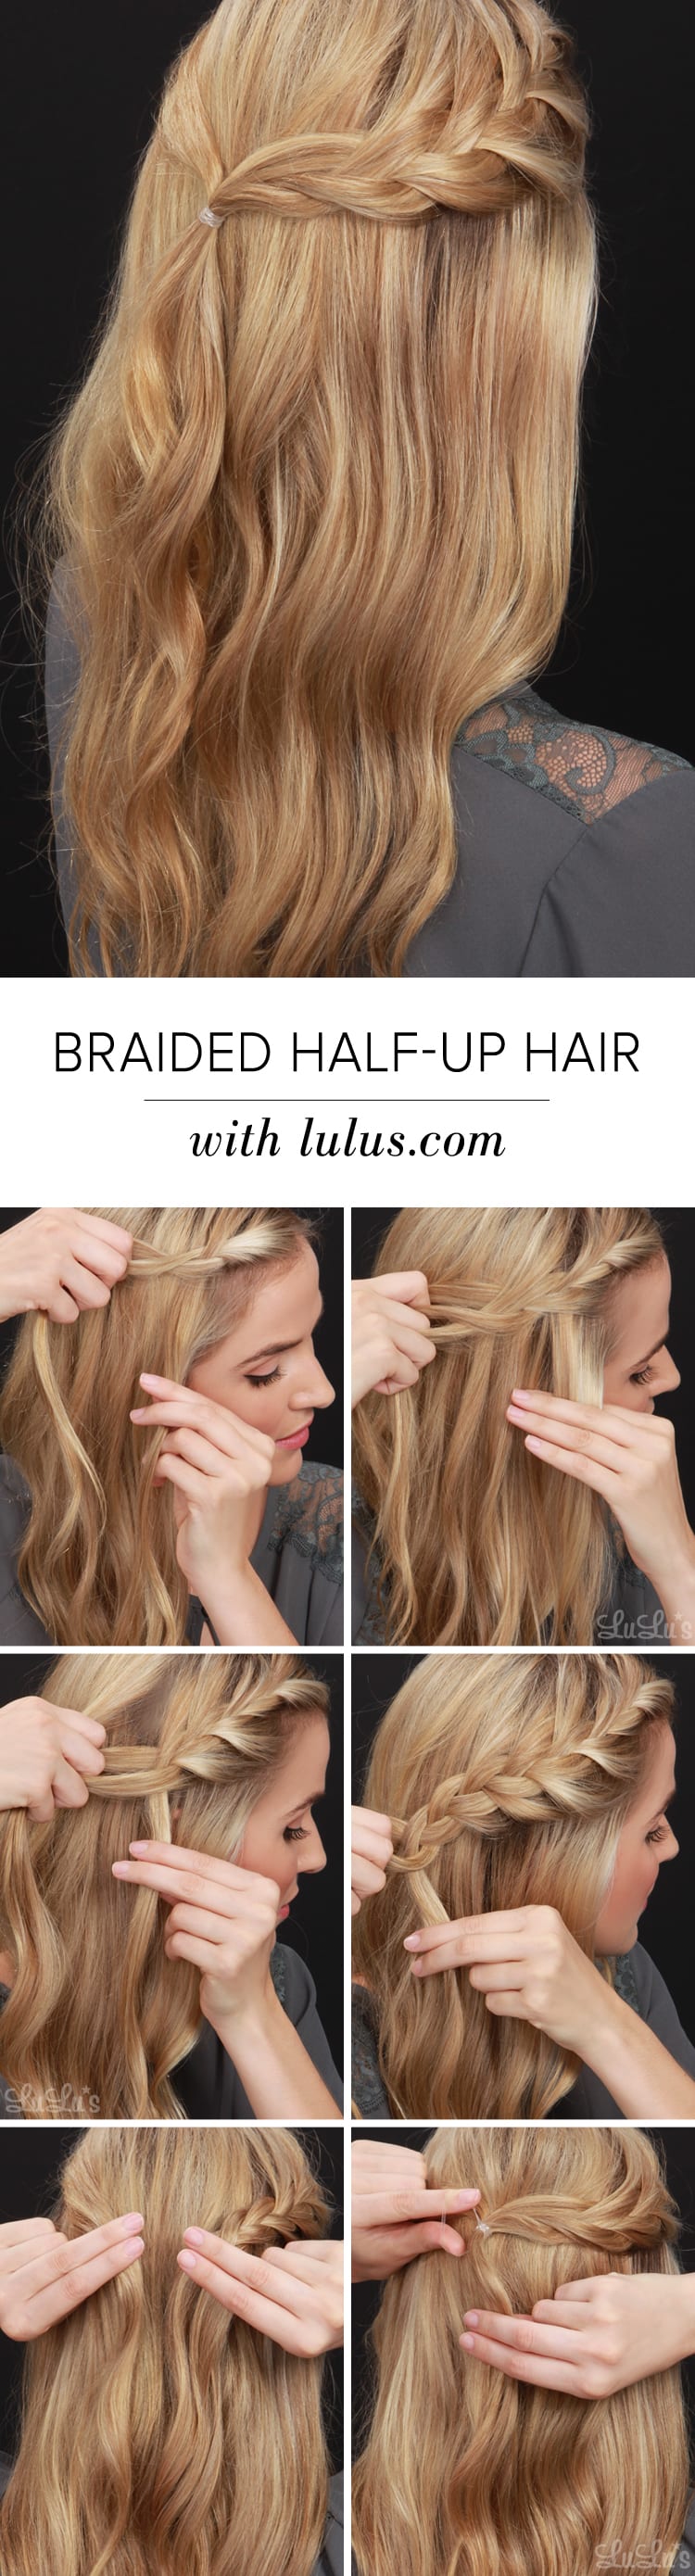 Lulus How To Half Up Braided Hair Tutorial Lulus Com